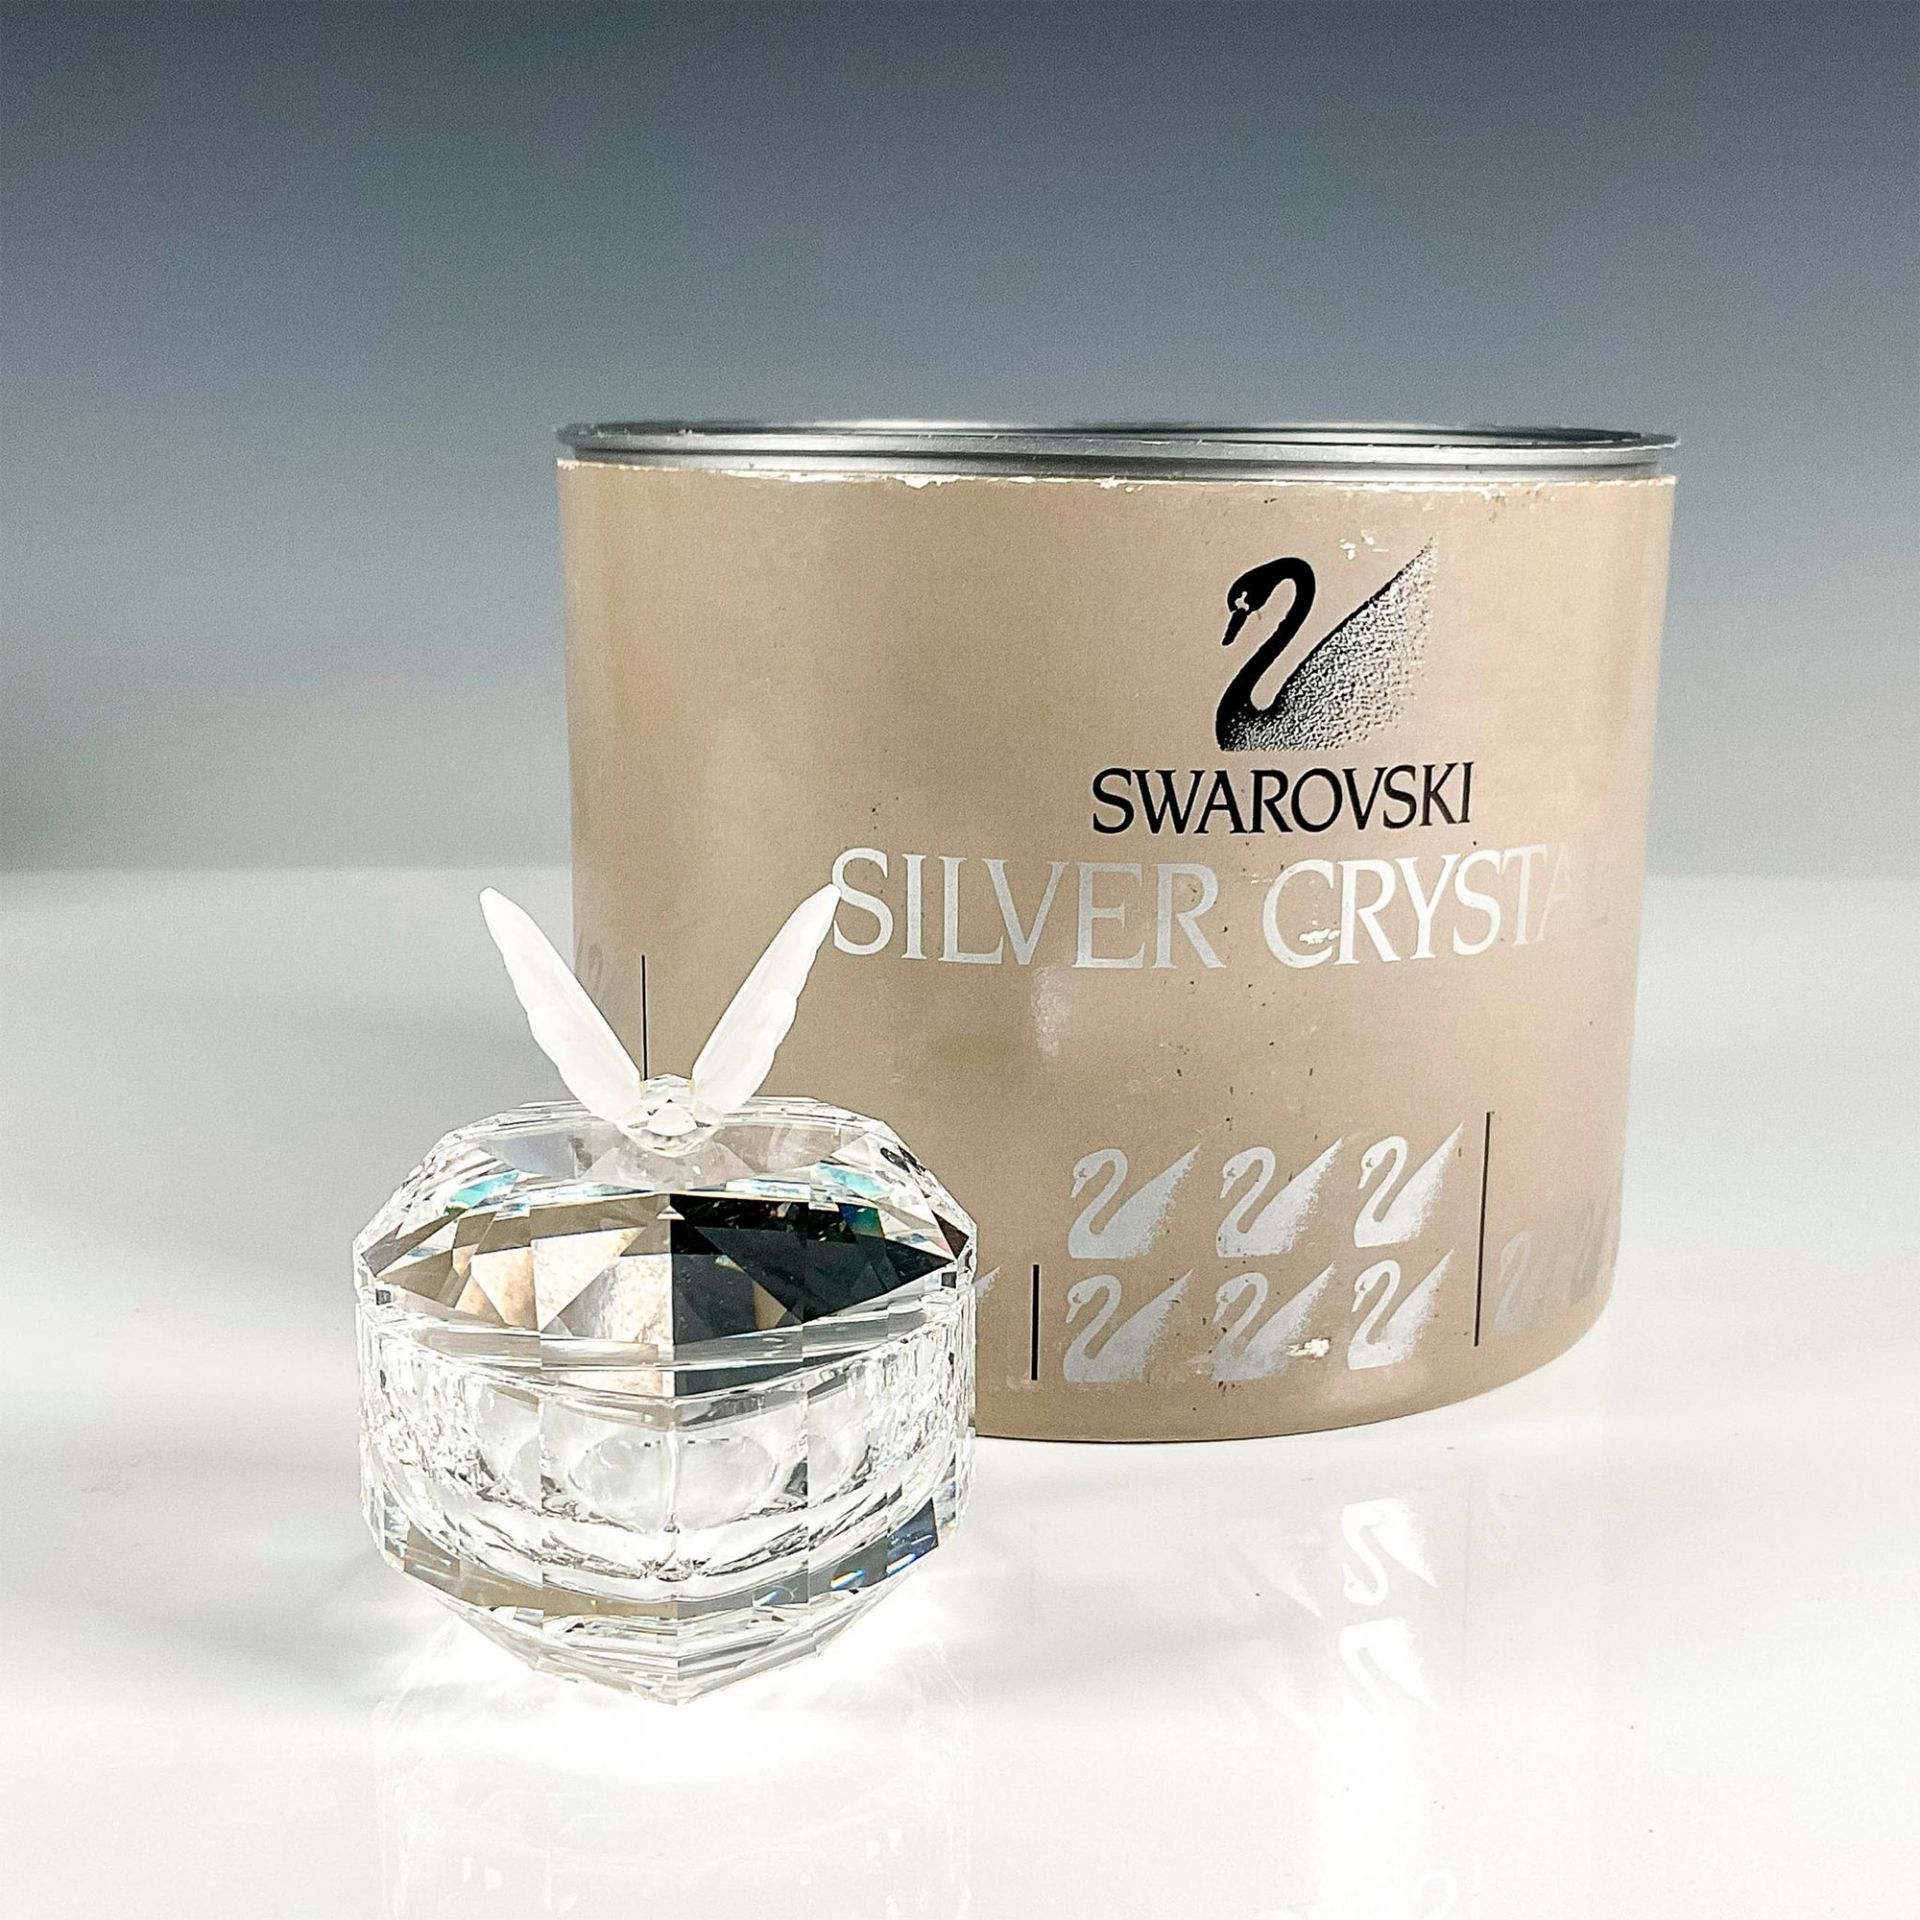 Swarovski Silver Crystal Treasure Box, Heart Butterfly - Image 4 of 4